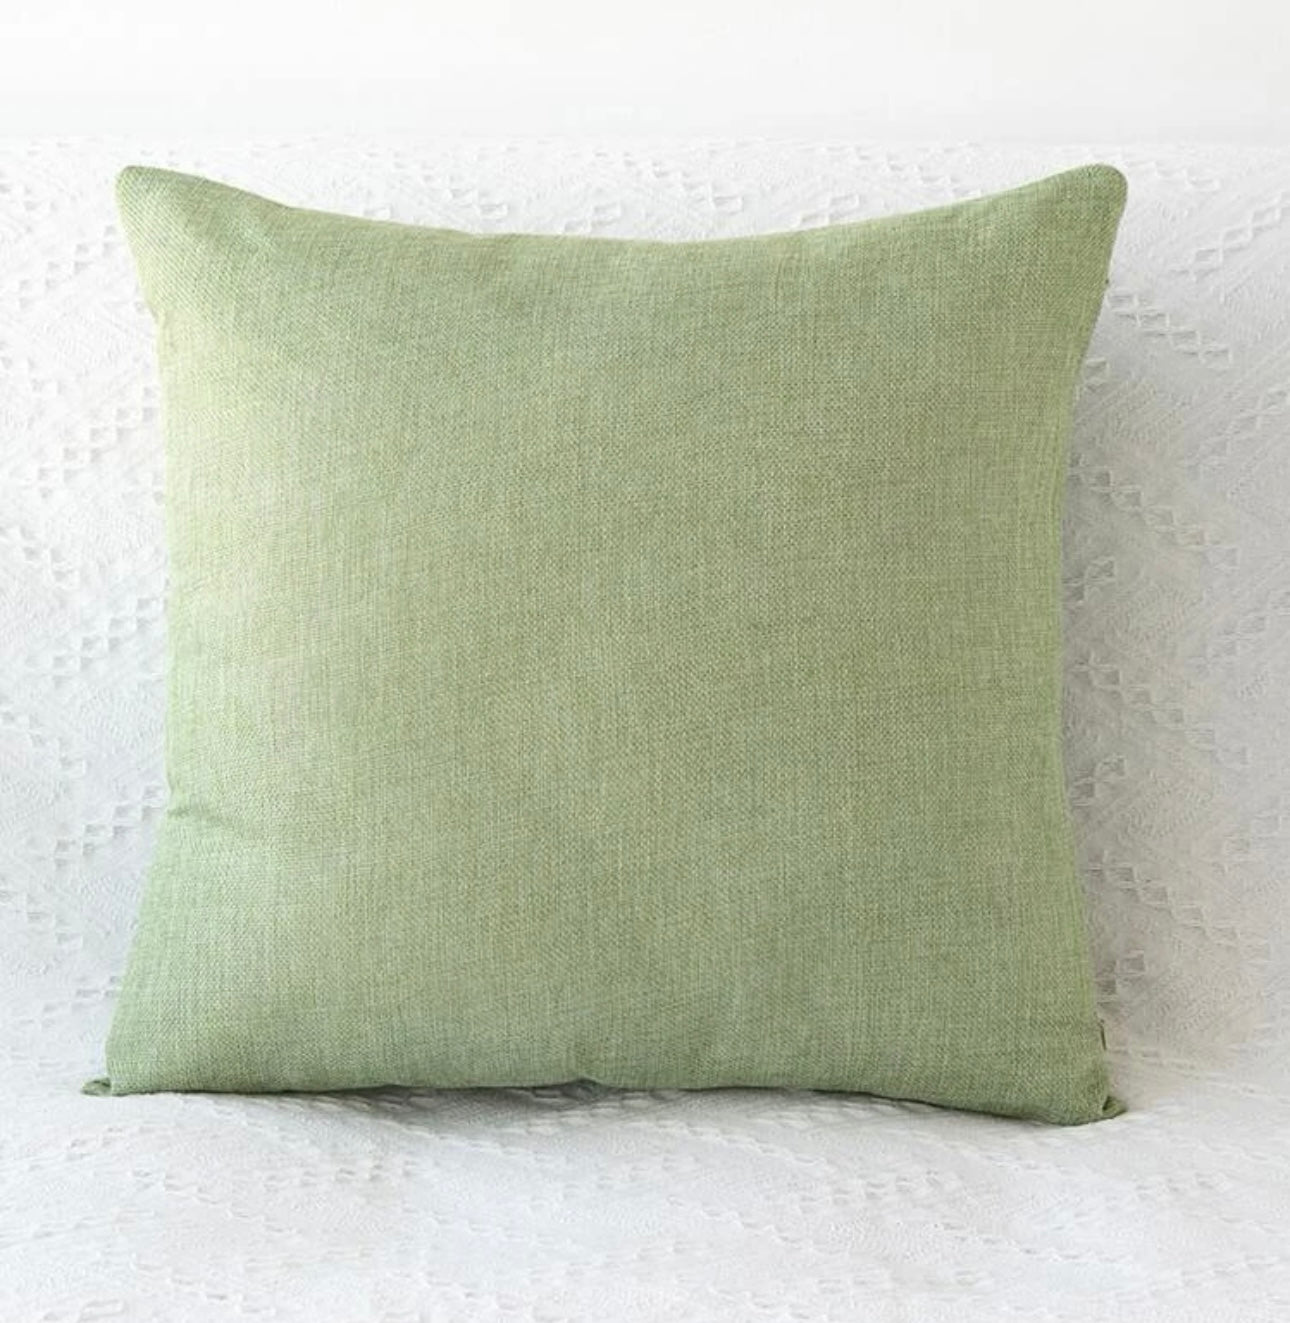 Light Green Cushion Cover